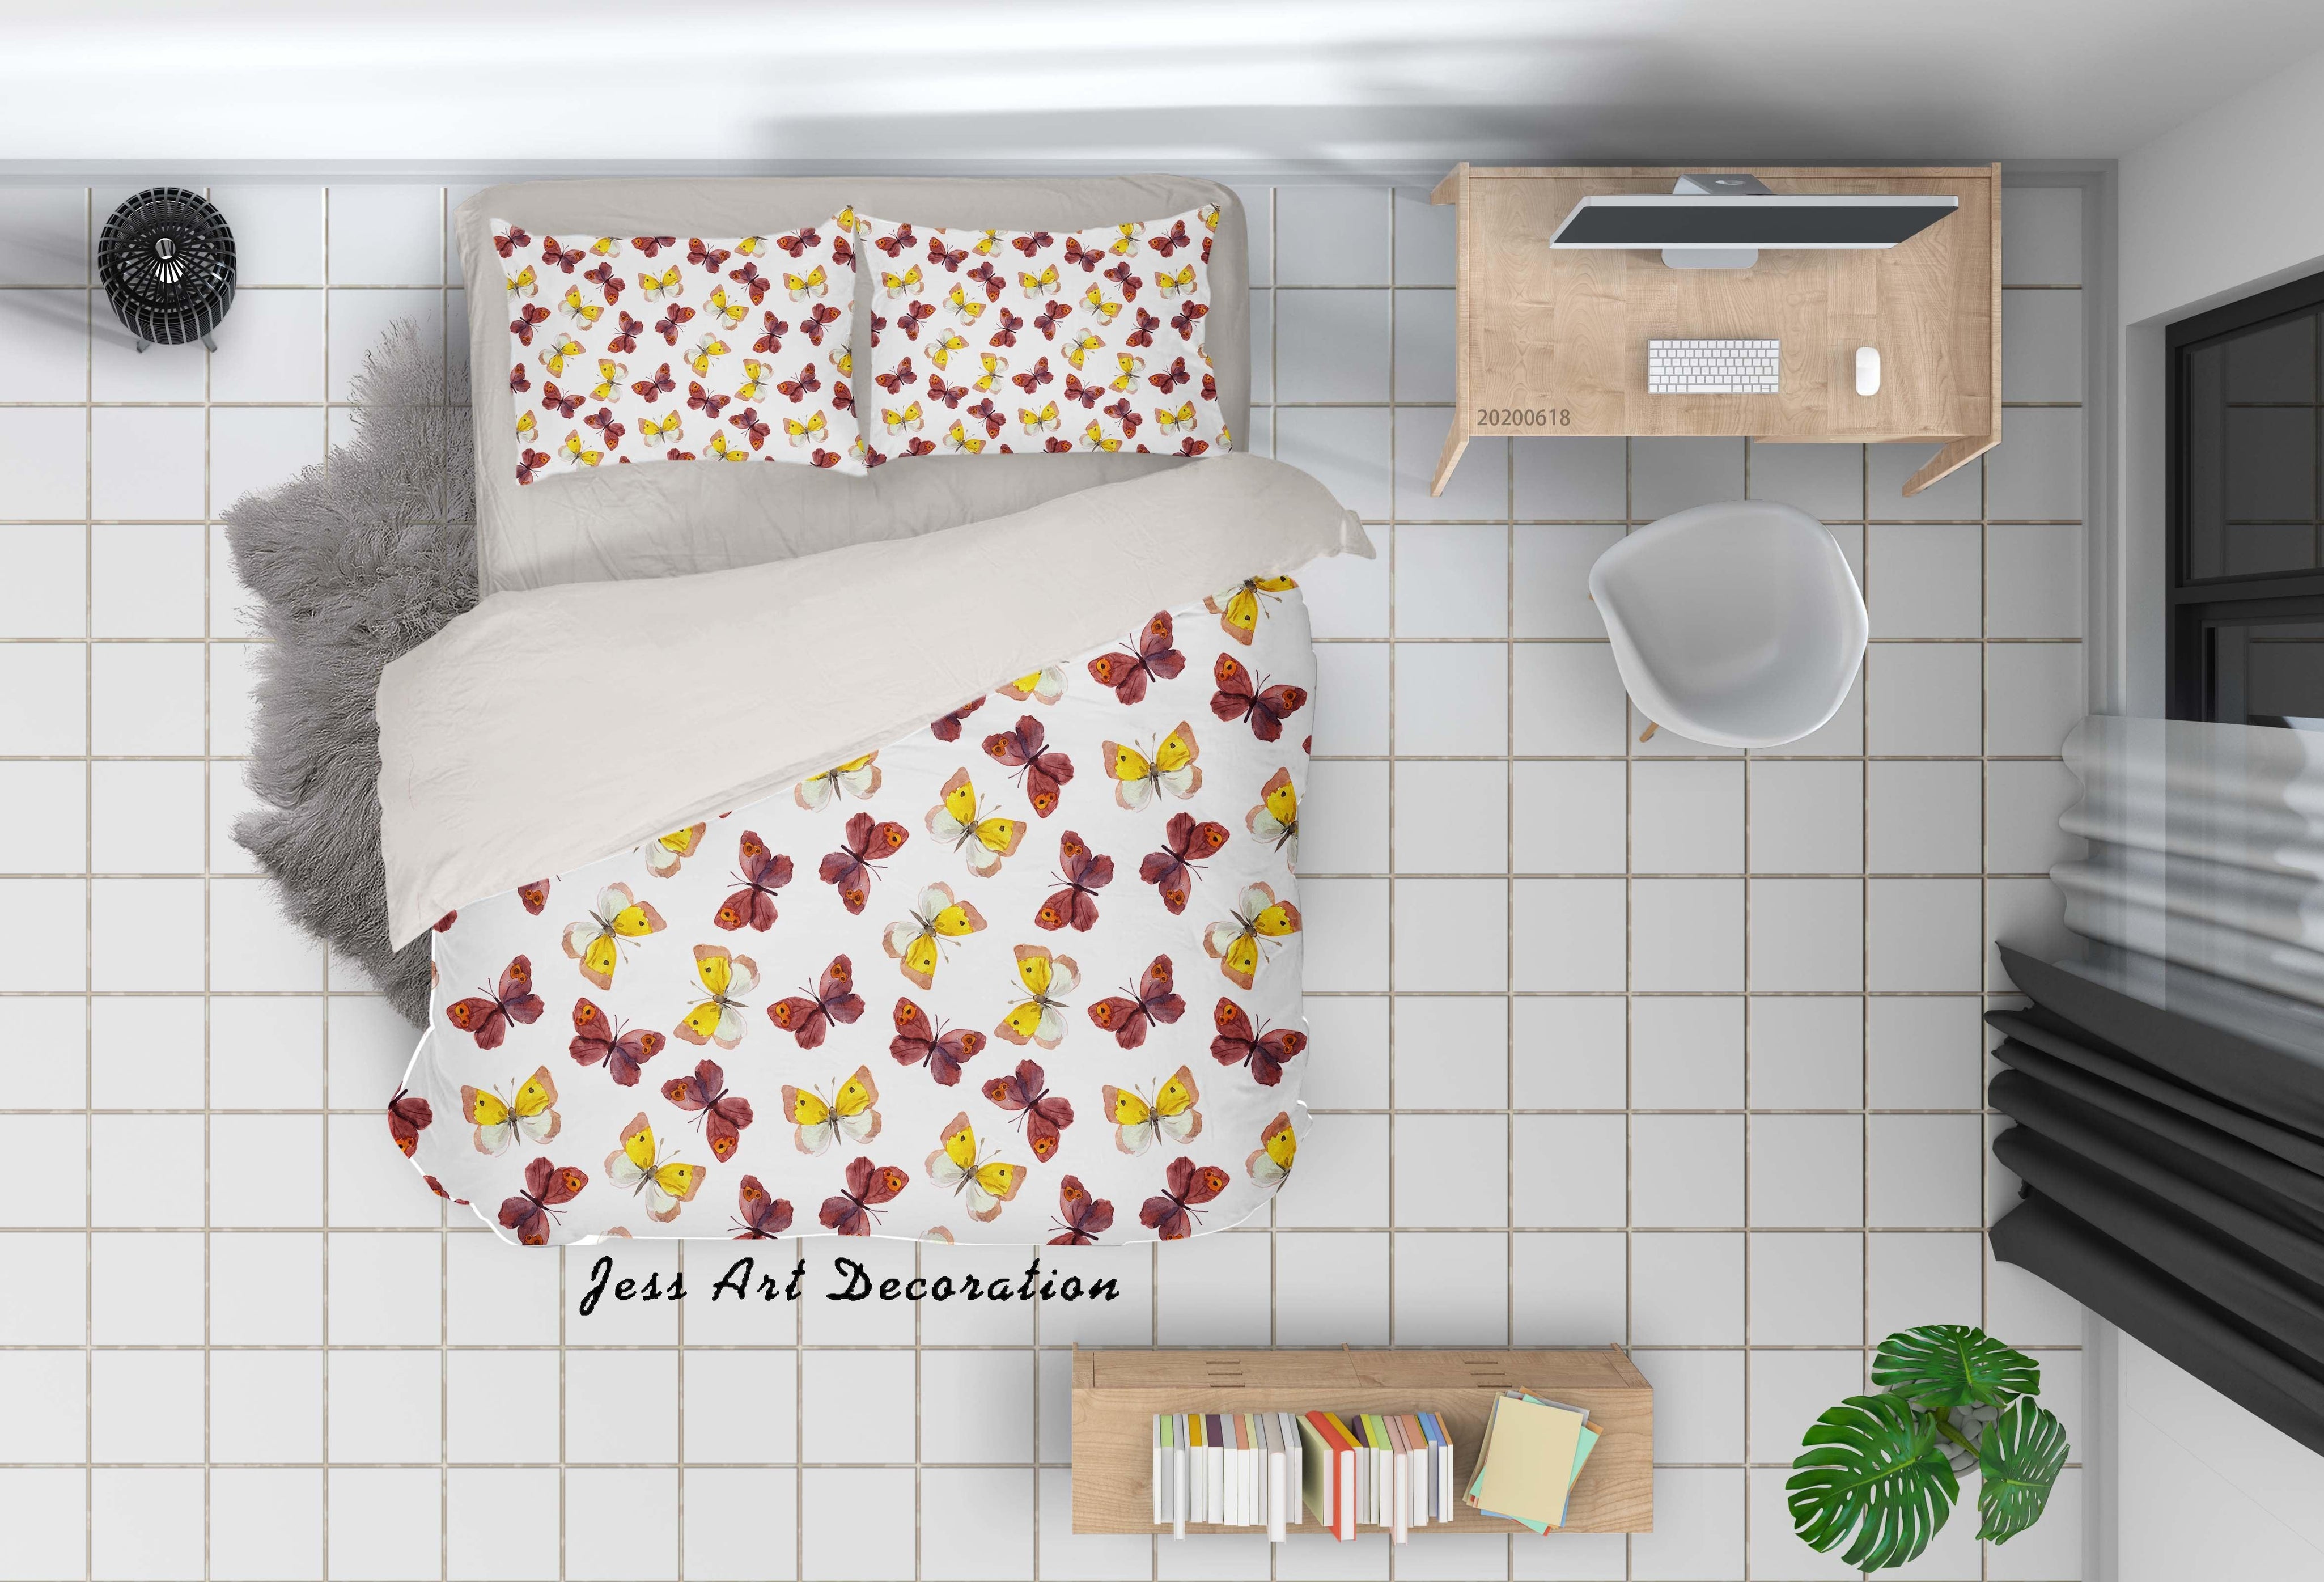 3D White Butterfly Quilt Cover Set Bedding Set Duvet Cover Pillowcases SF01- Jess Art Decoration